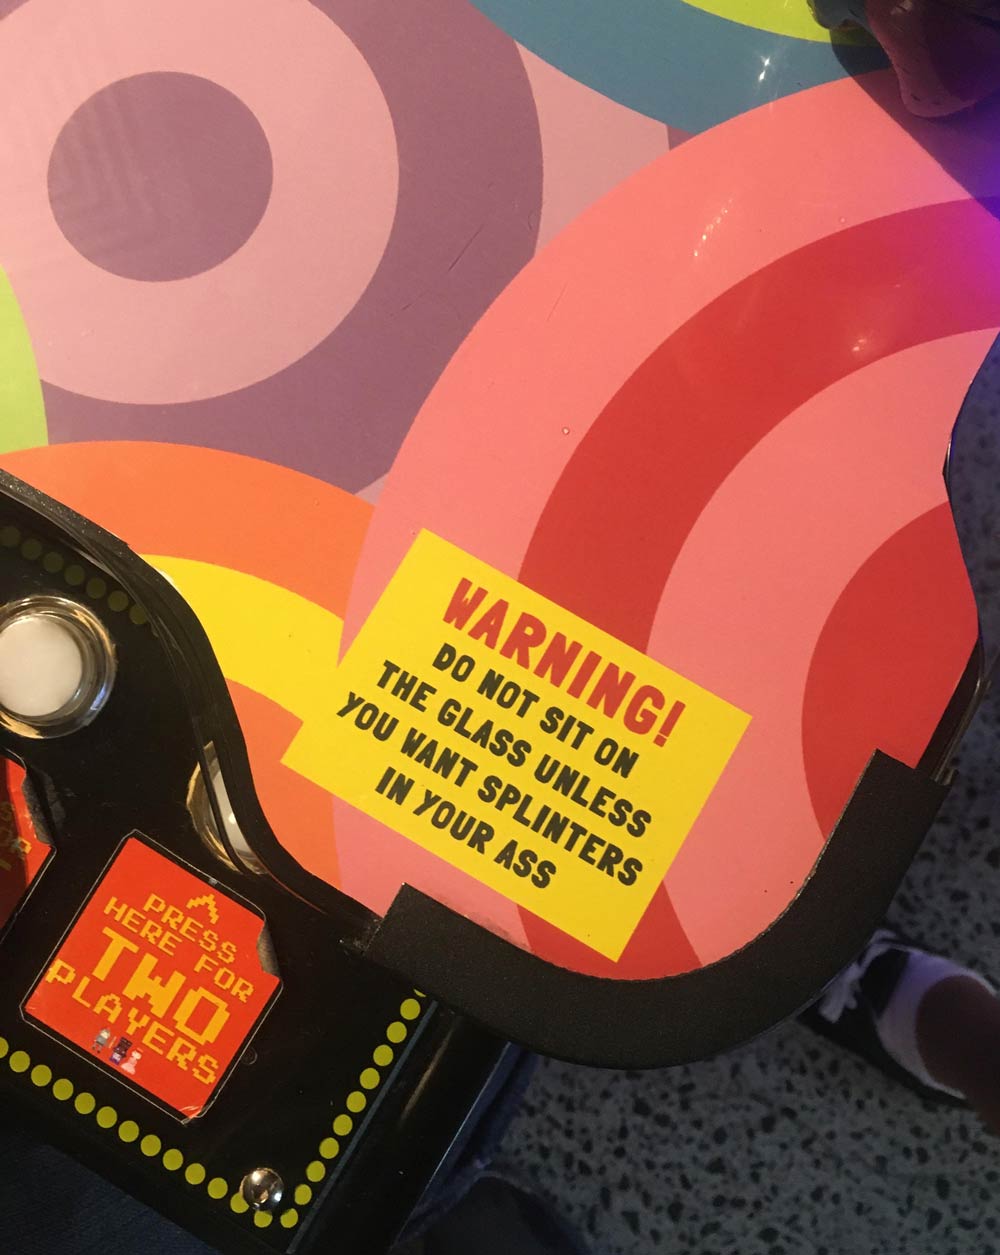 Warning sticker at this arcade